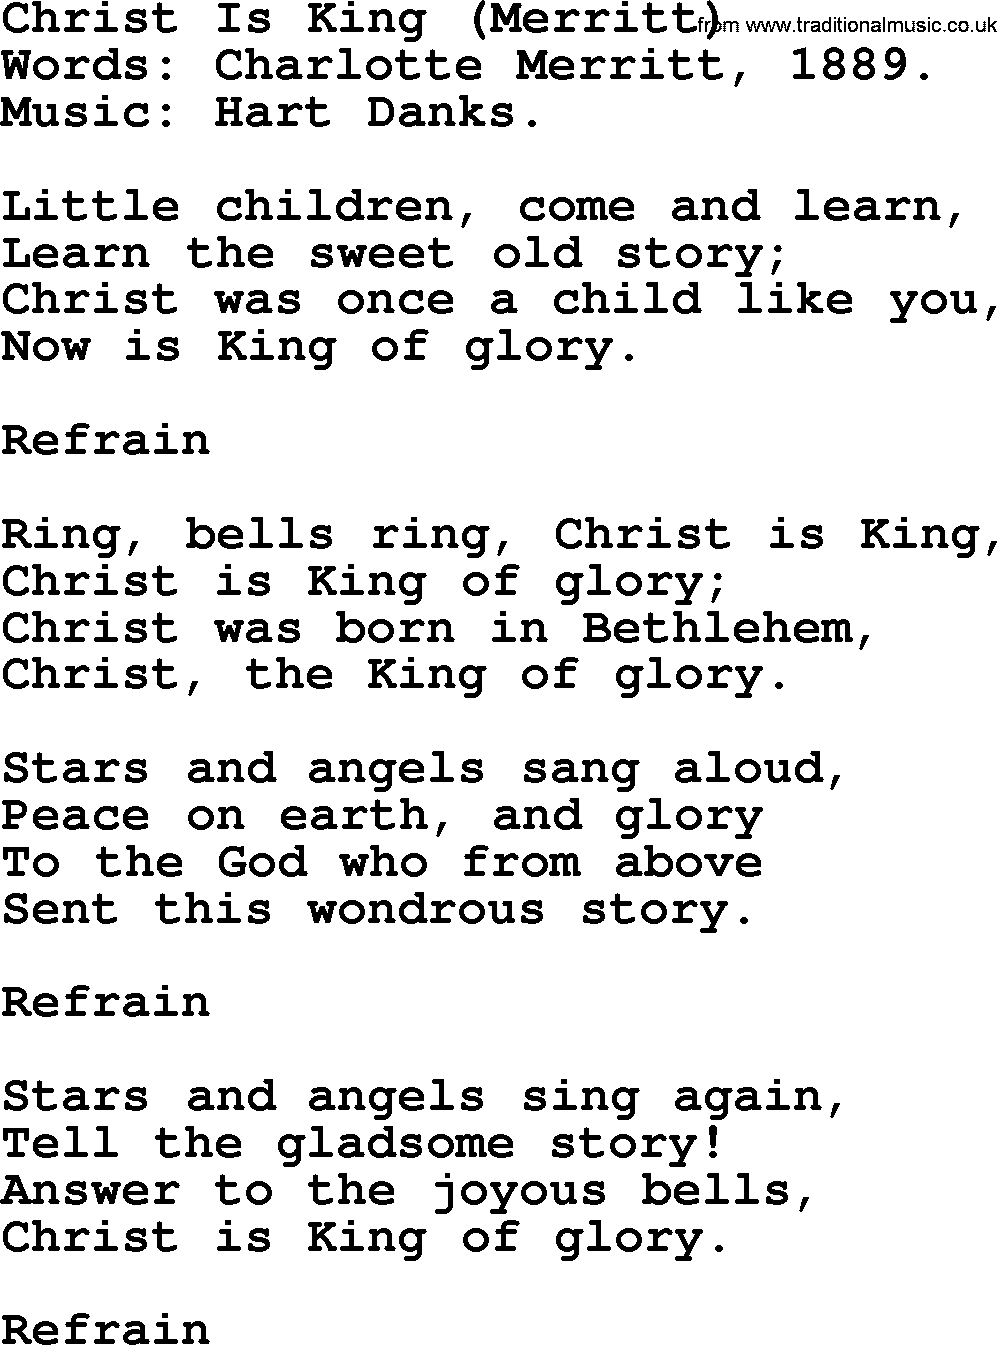 Christmas Hymns, Carols and Songs, title: Christ Is King (merritt), lyrics with PDF